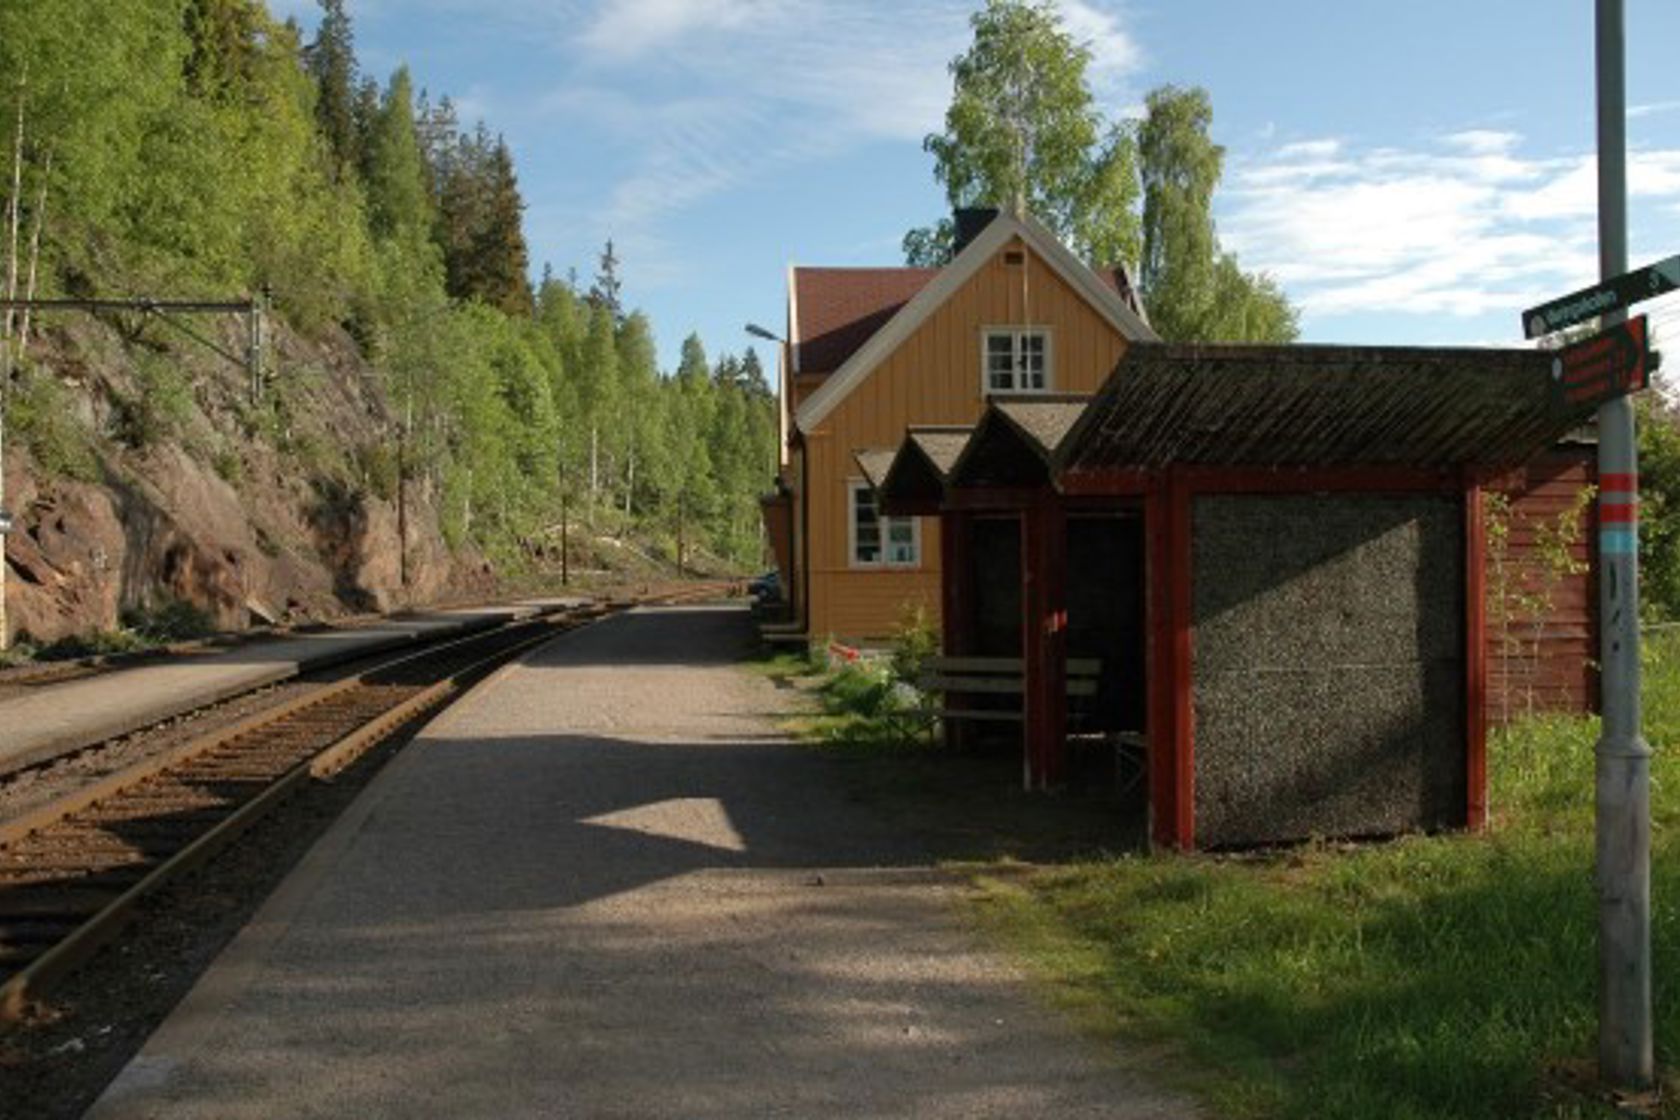 Exterior view of Åneby stop